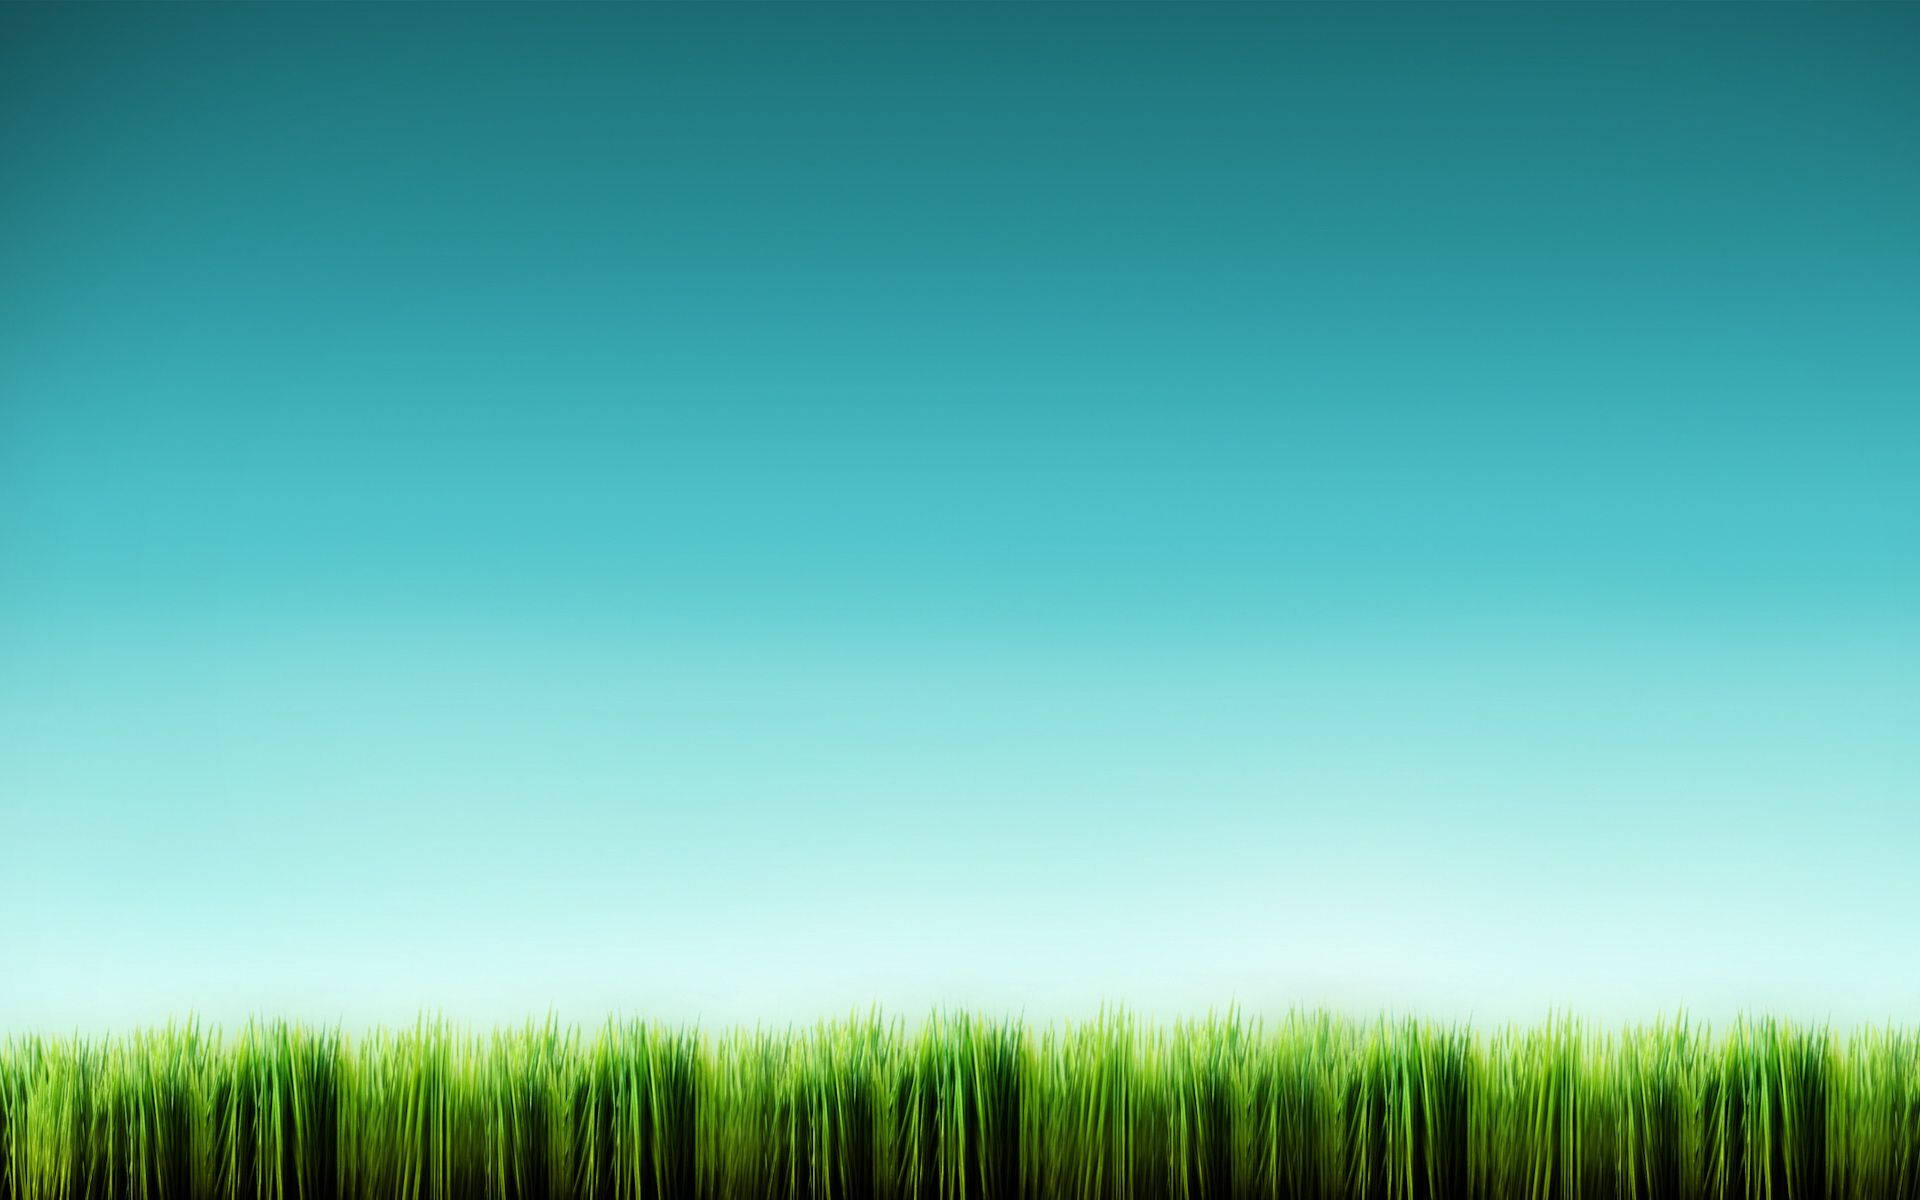 Tall Grass Blue Sky Background